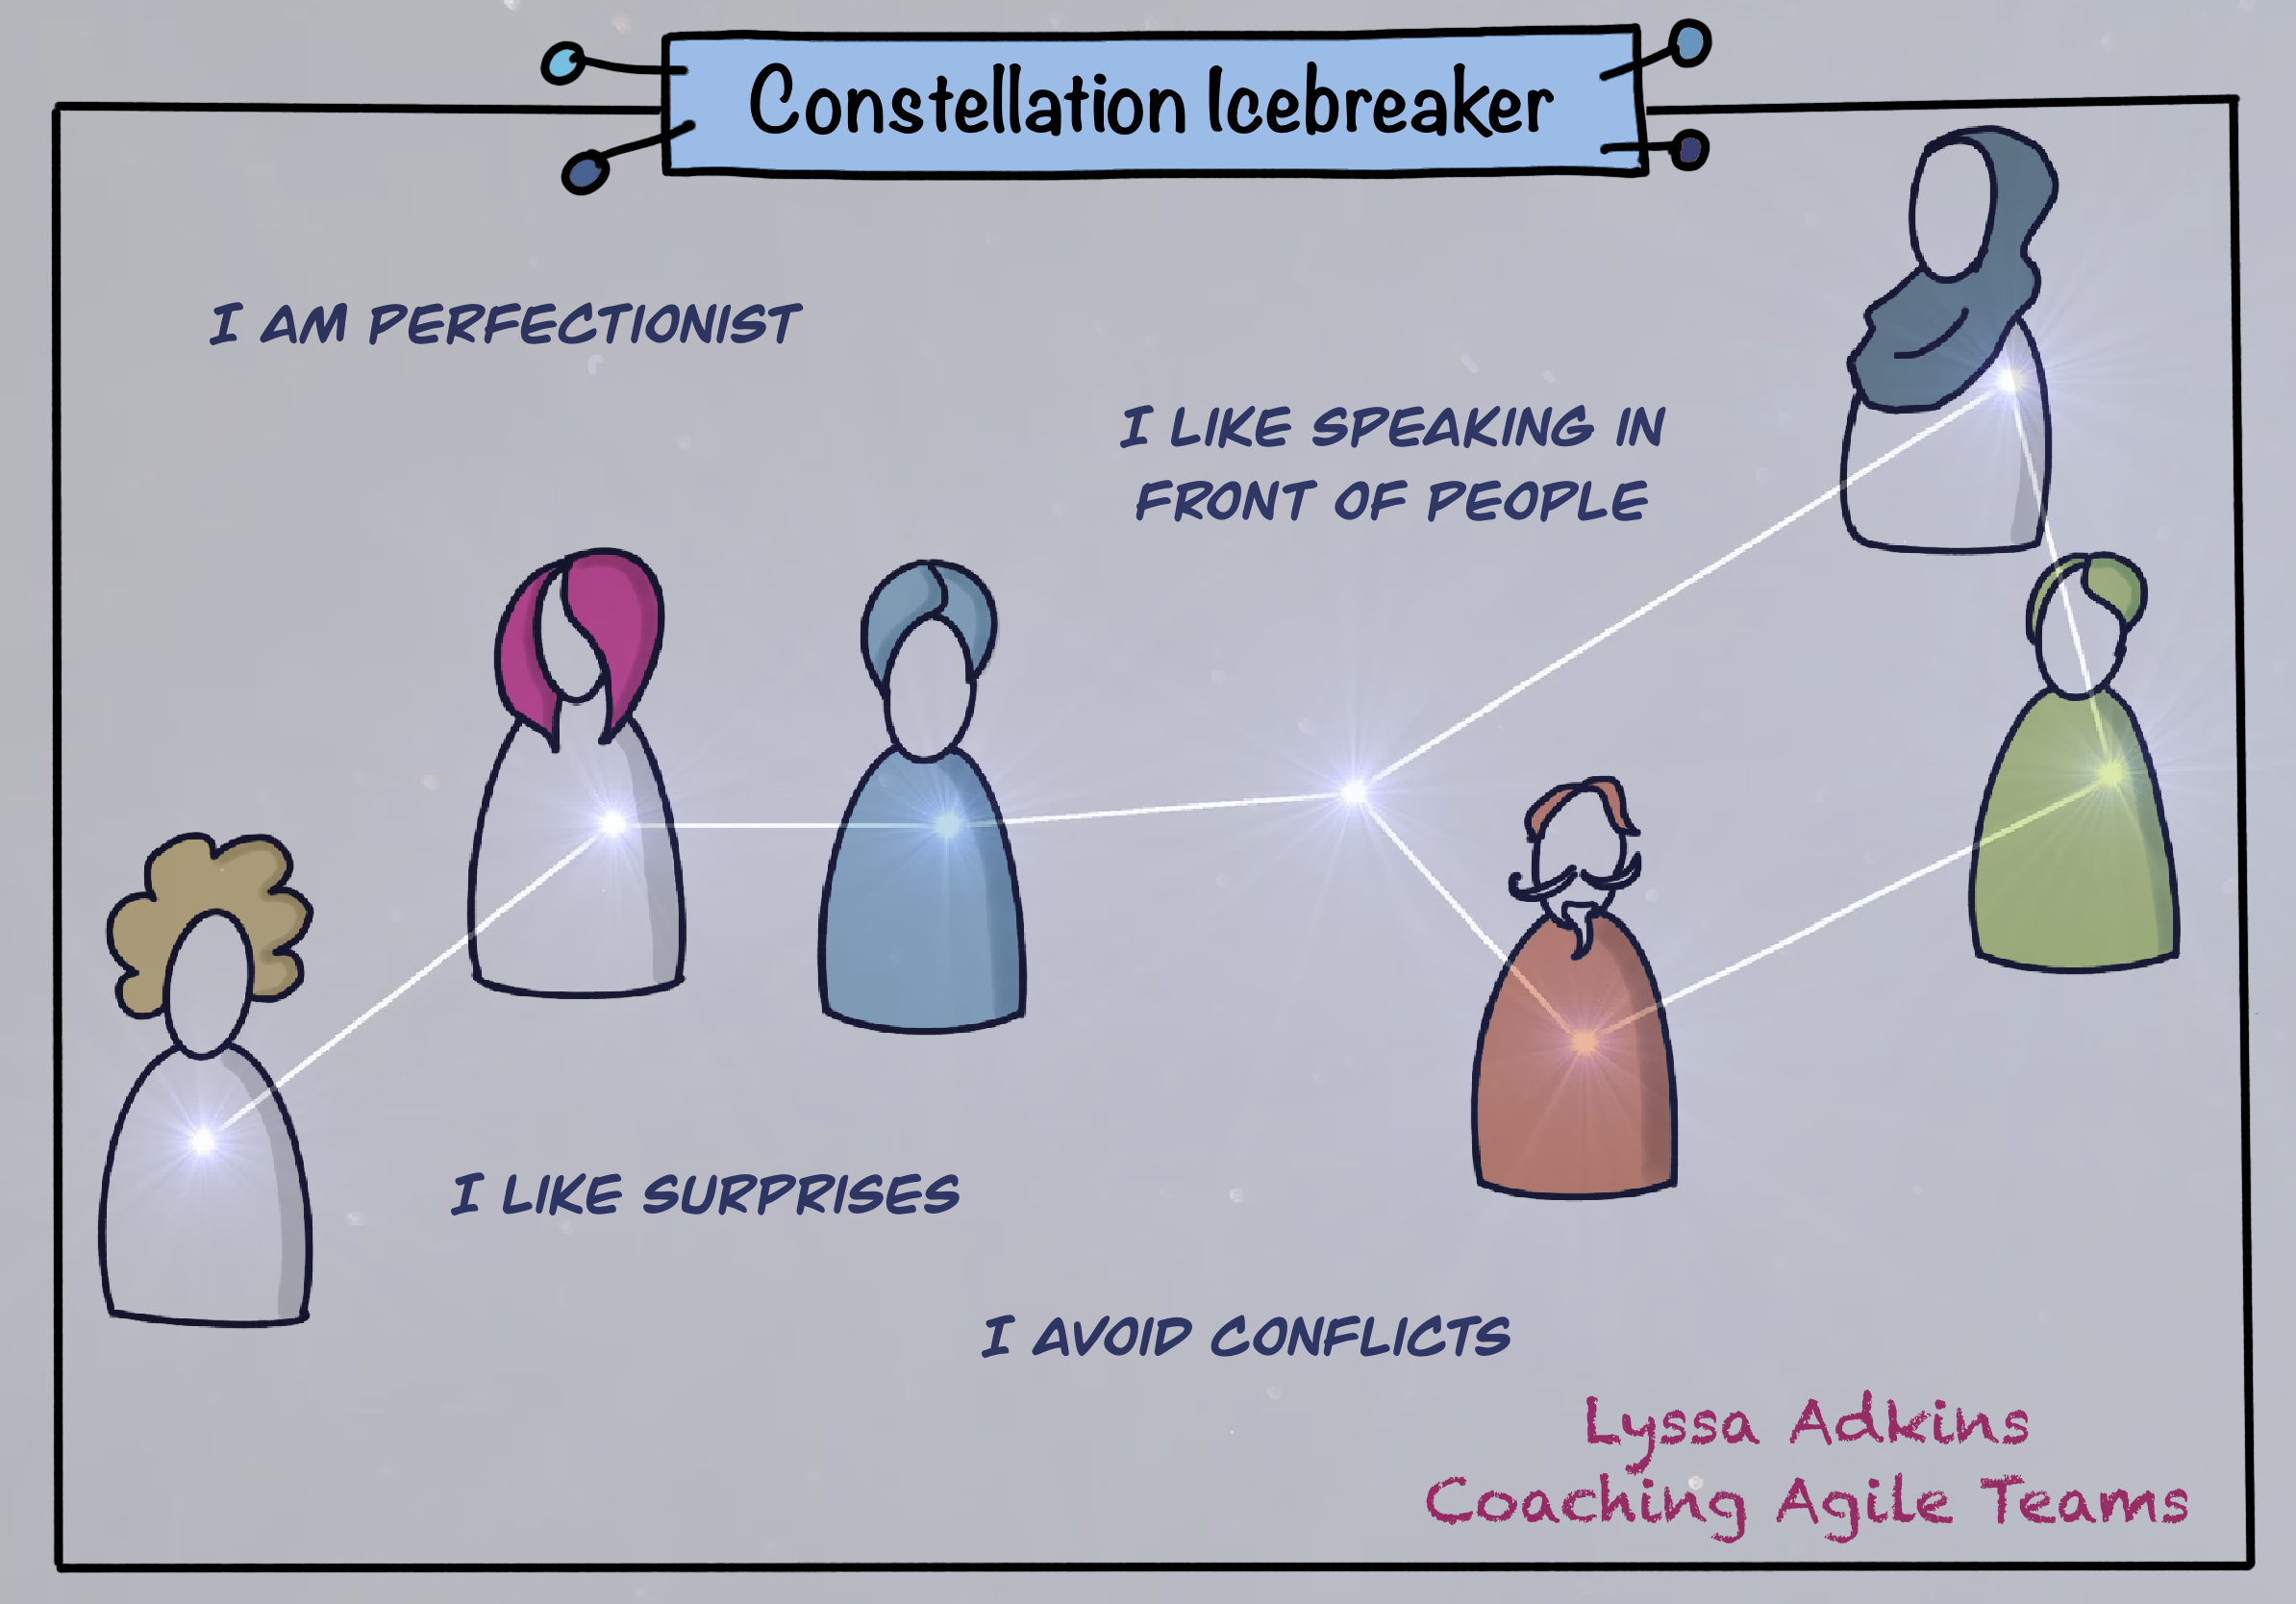 Constellation Icebreaker